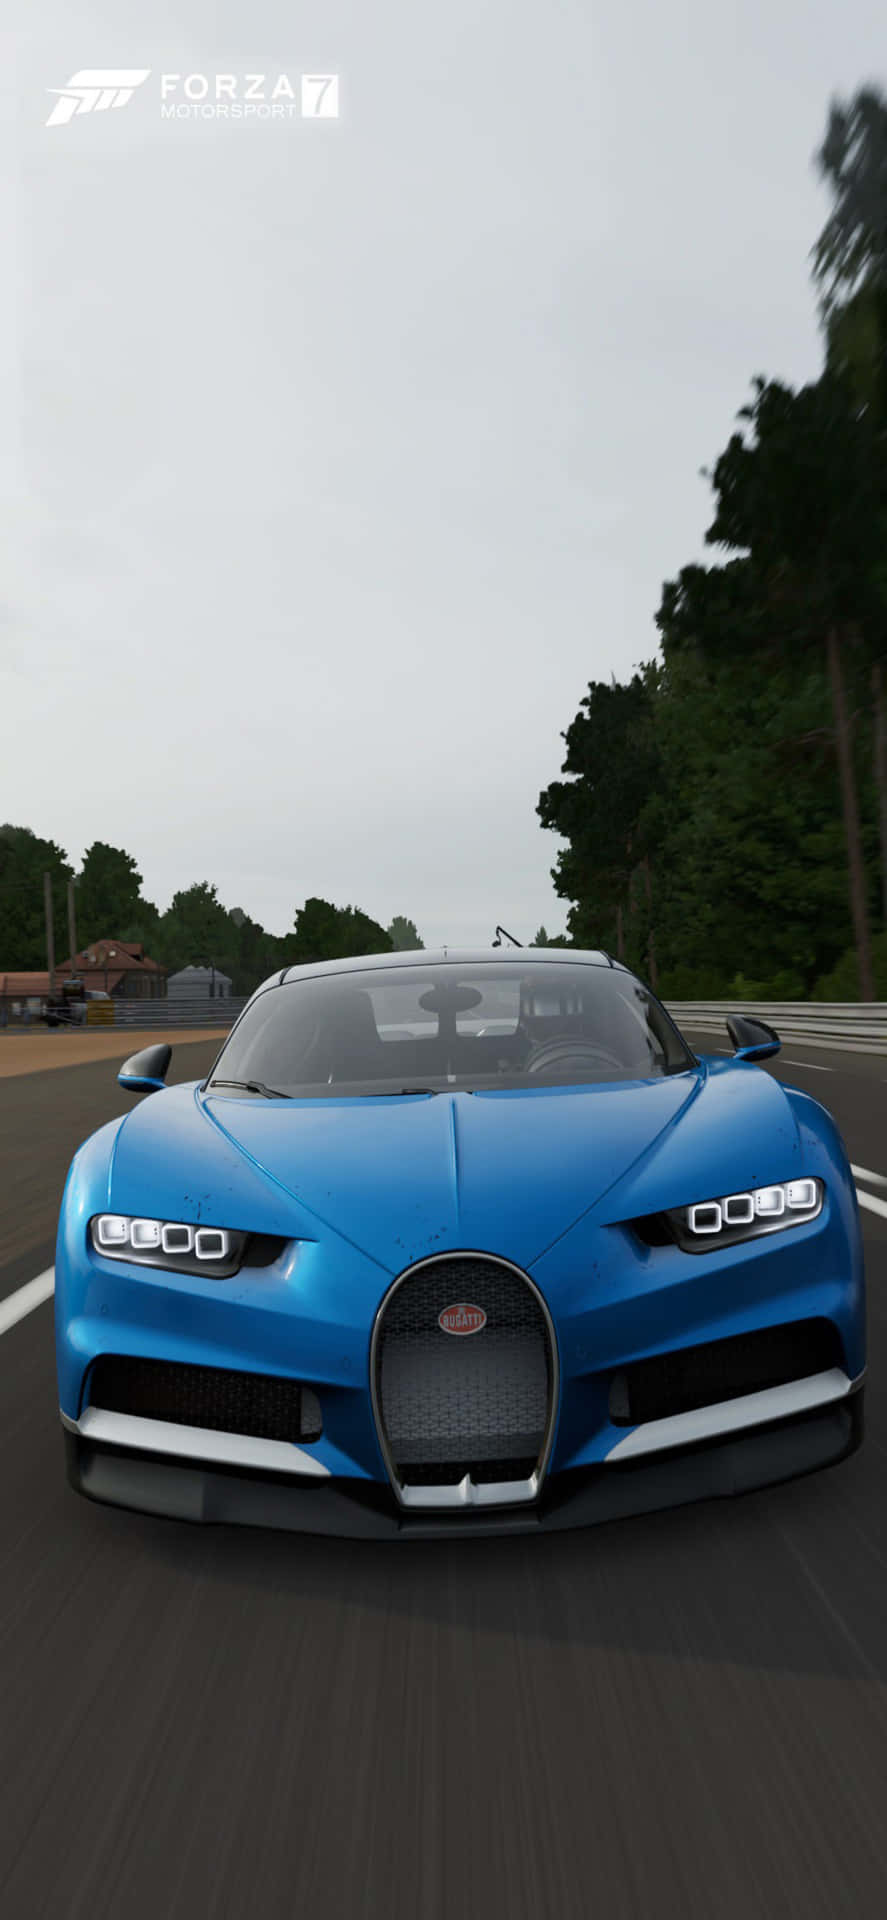 Sfondobugatti Chiron Blu Per Iphone X In Forza Motorsport 7.